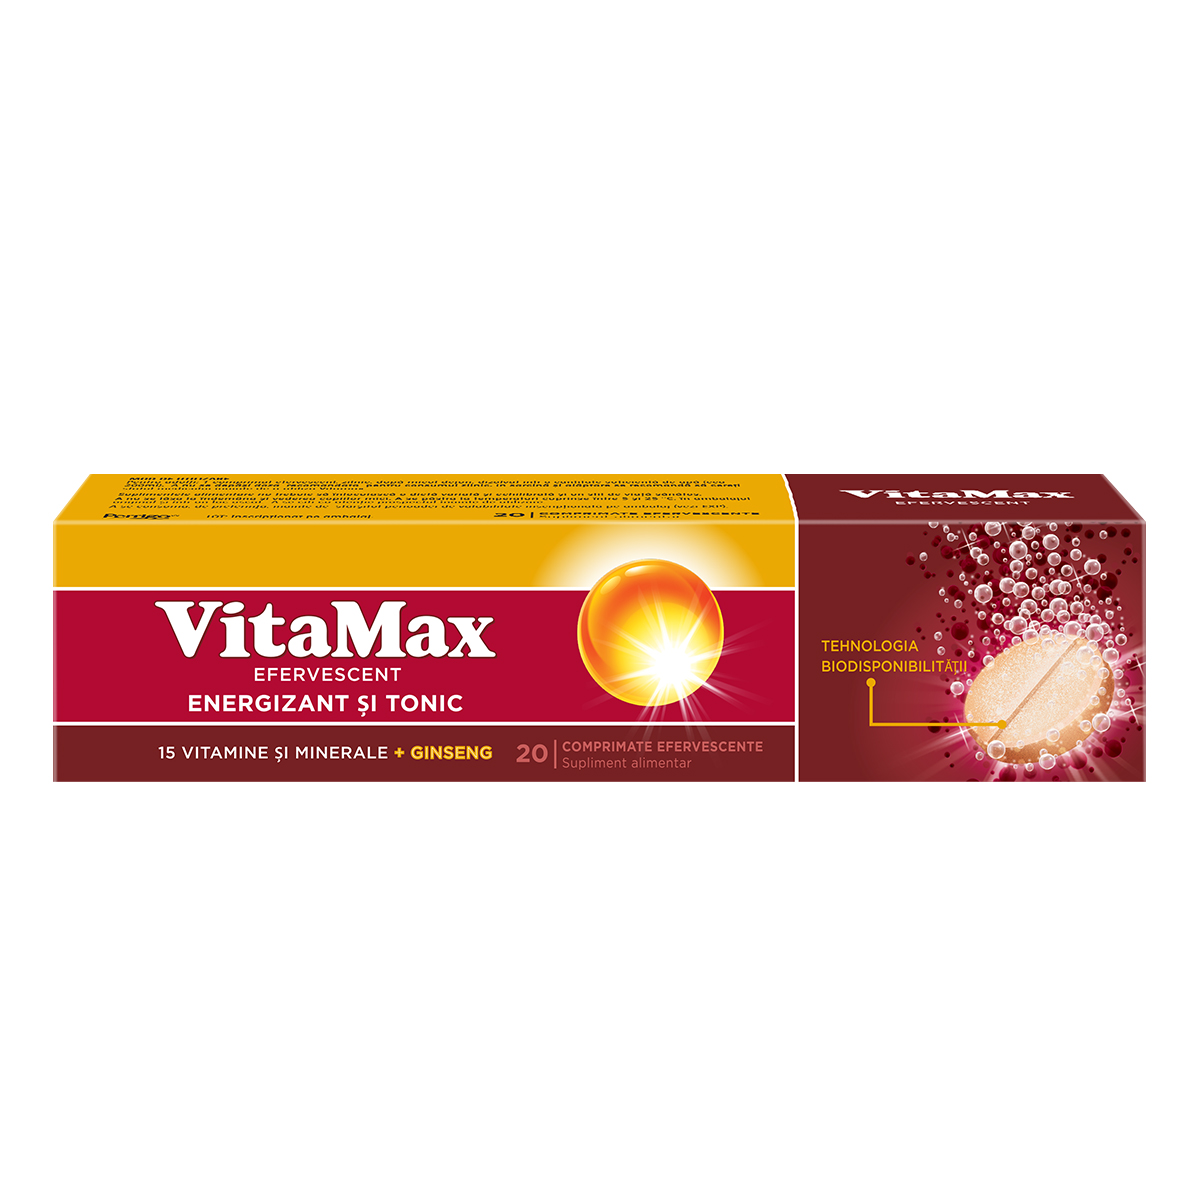 Vitamine si suplimente - Vitamax Efervescent, 20 comprimate, Perrigo
, nordpharm.ro